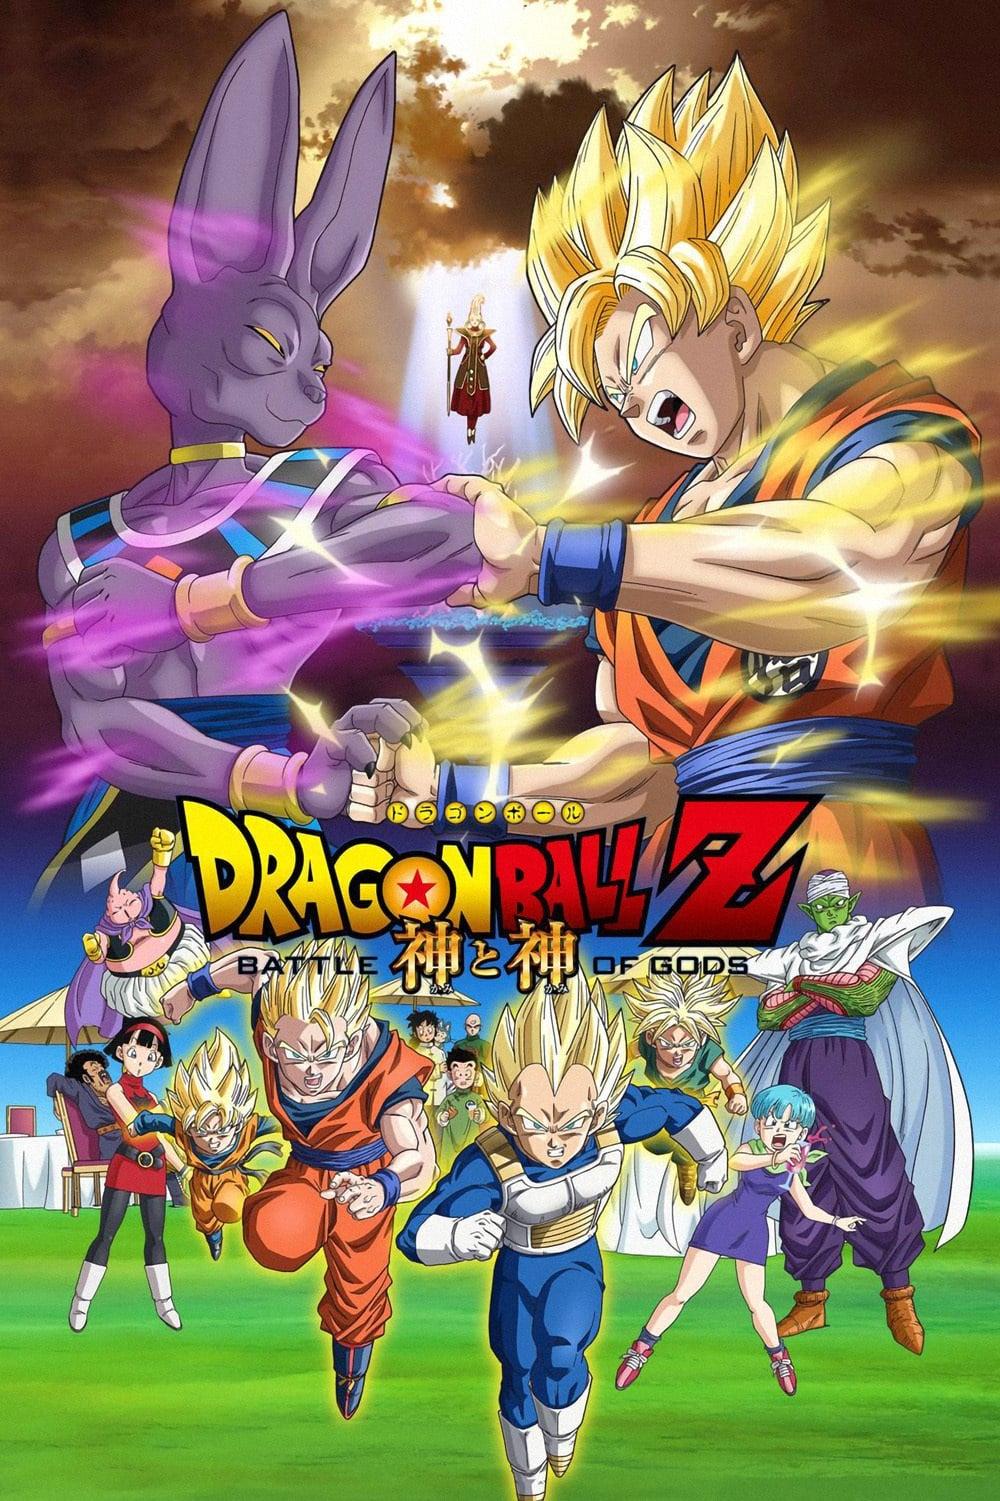 Dragonball Z: Kampf der Götter poster